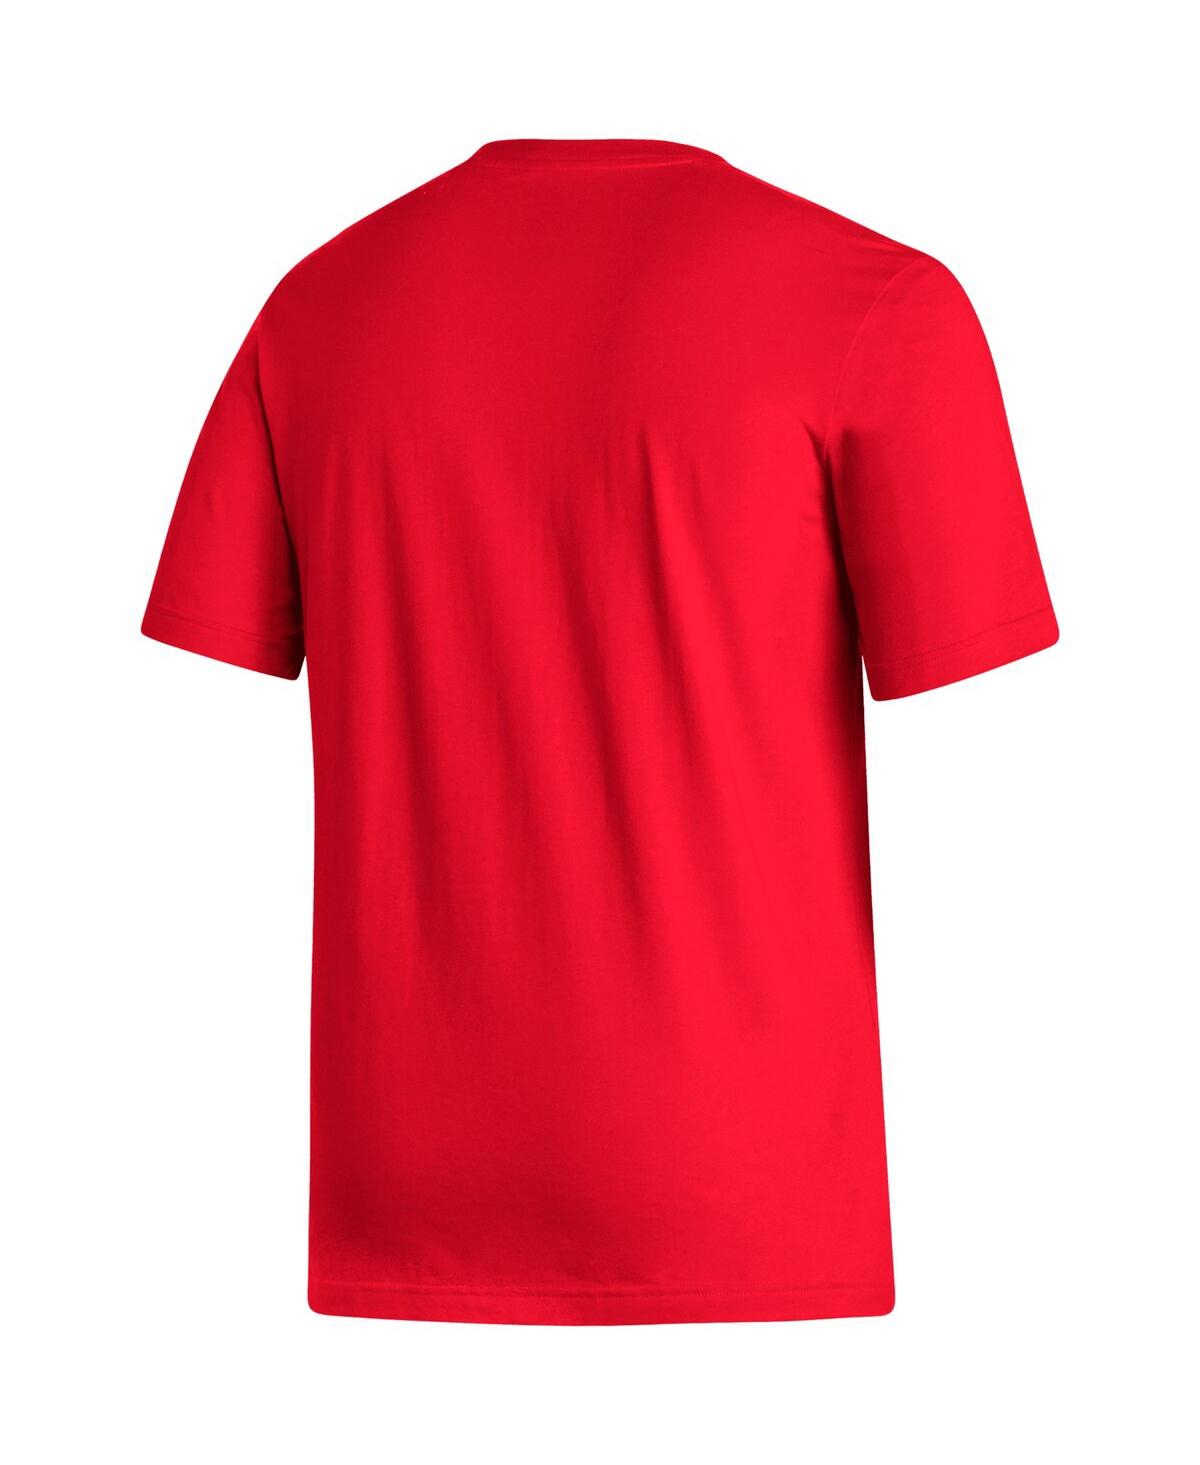 Shop Adidas Originals Men's Adidas Red Ajax Dassler T-shirt